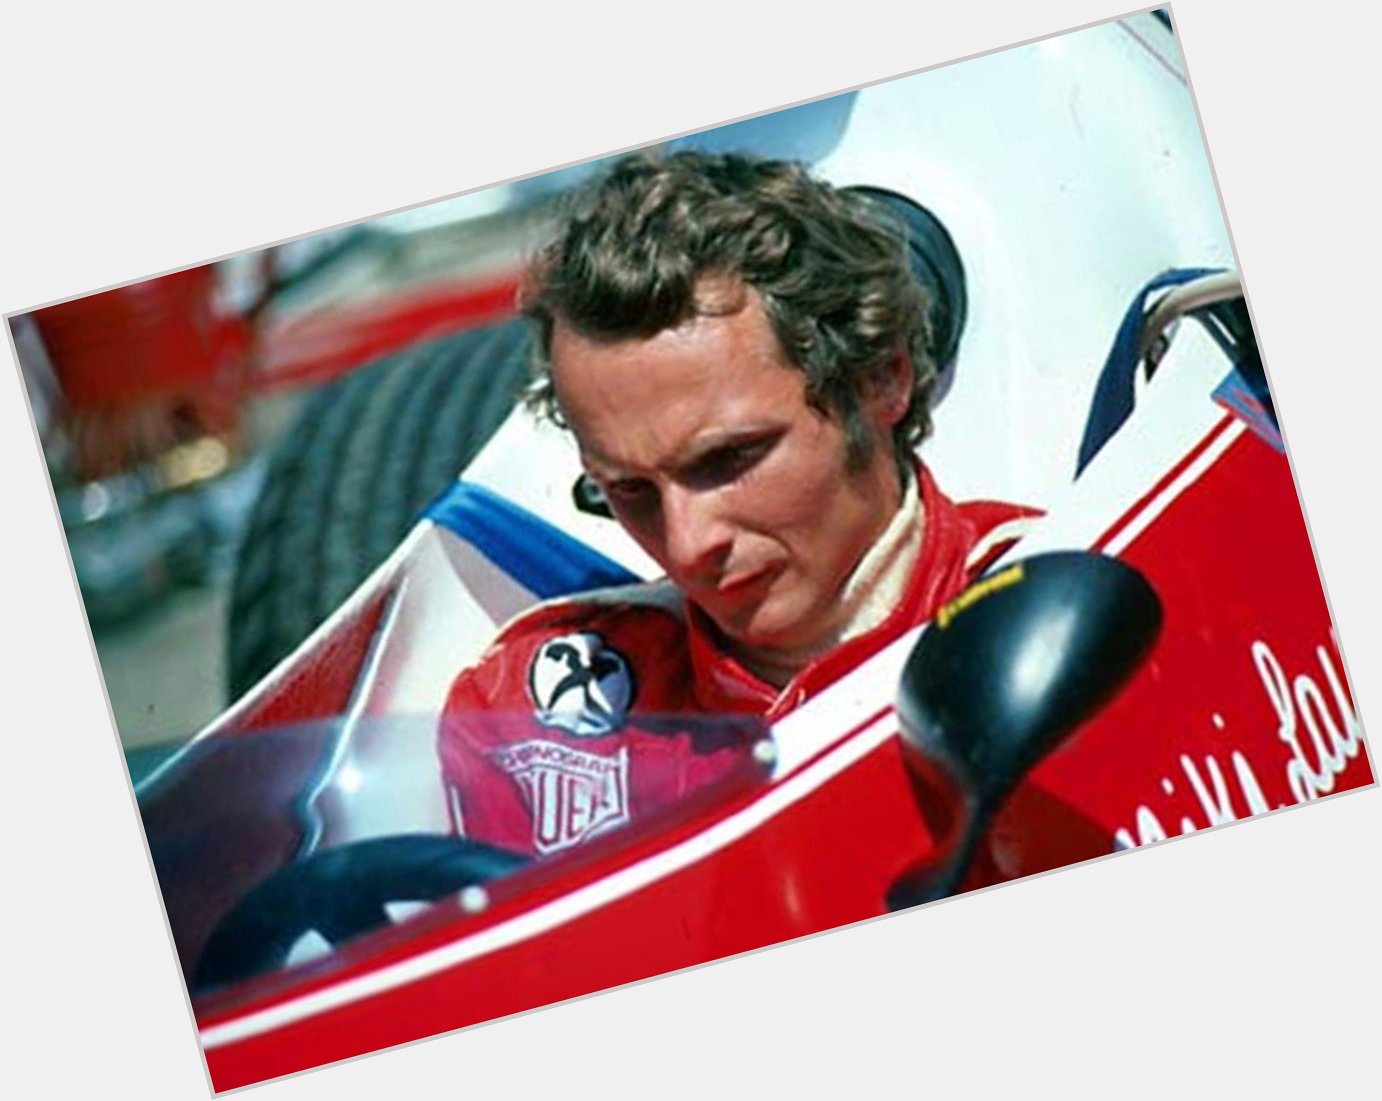 Happy Birthday to the three time world champion, Niki Lauda   